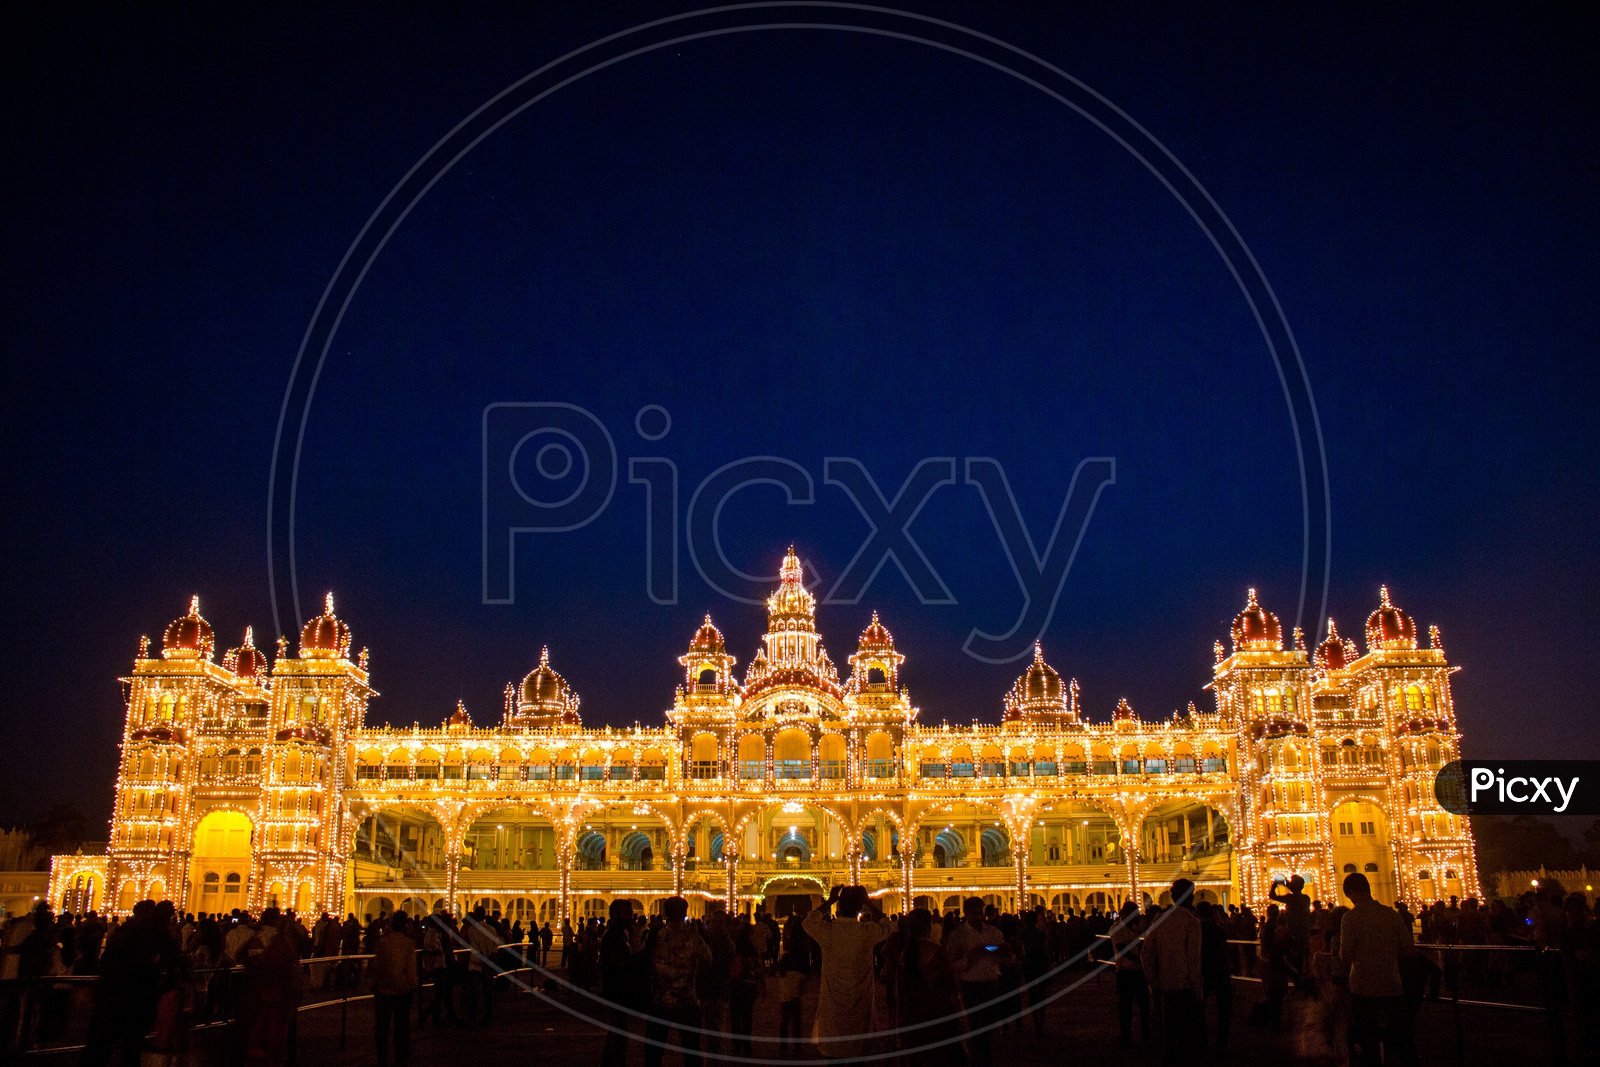 Night View of Mysore Palace